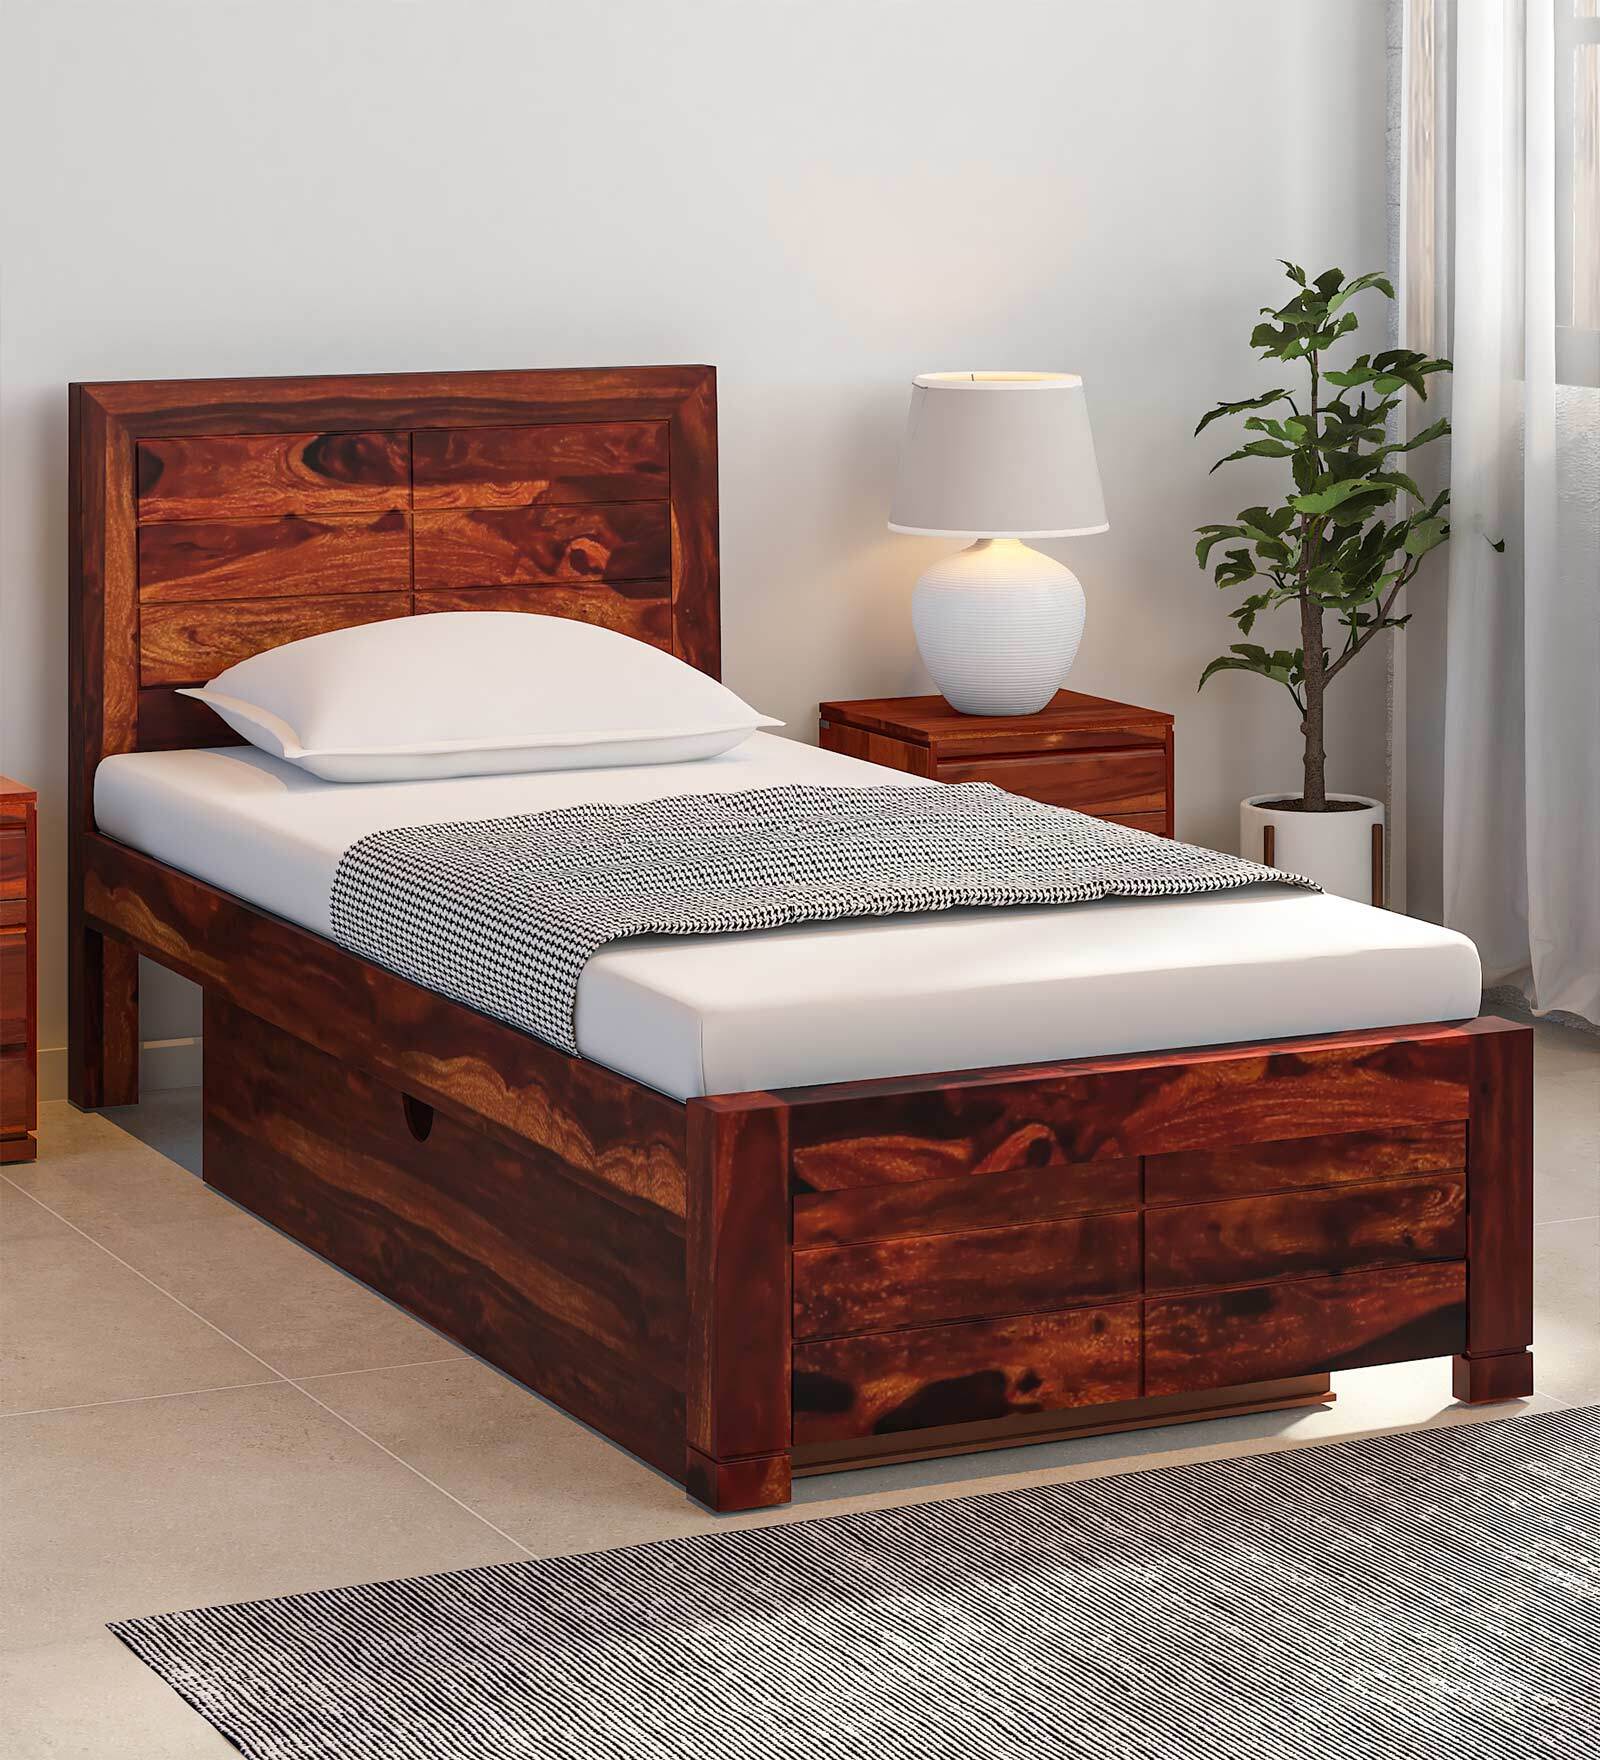 Moscow Solid Wood Single Bed With Drawer Storage In Honey Oak Finish By Rajwada - Rajwada Furnish